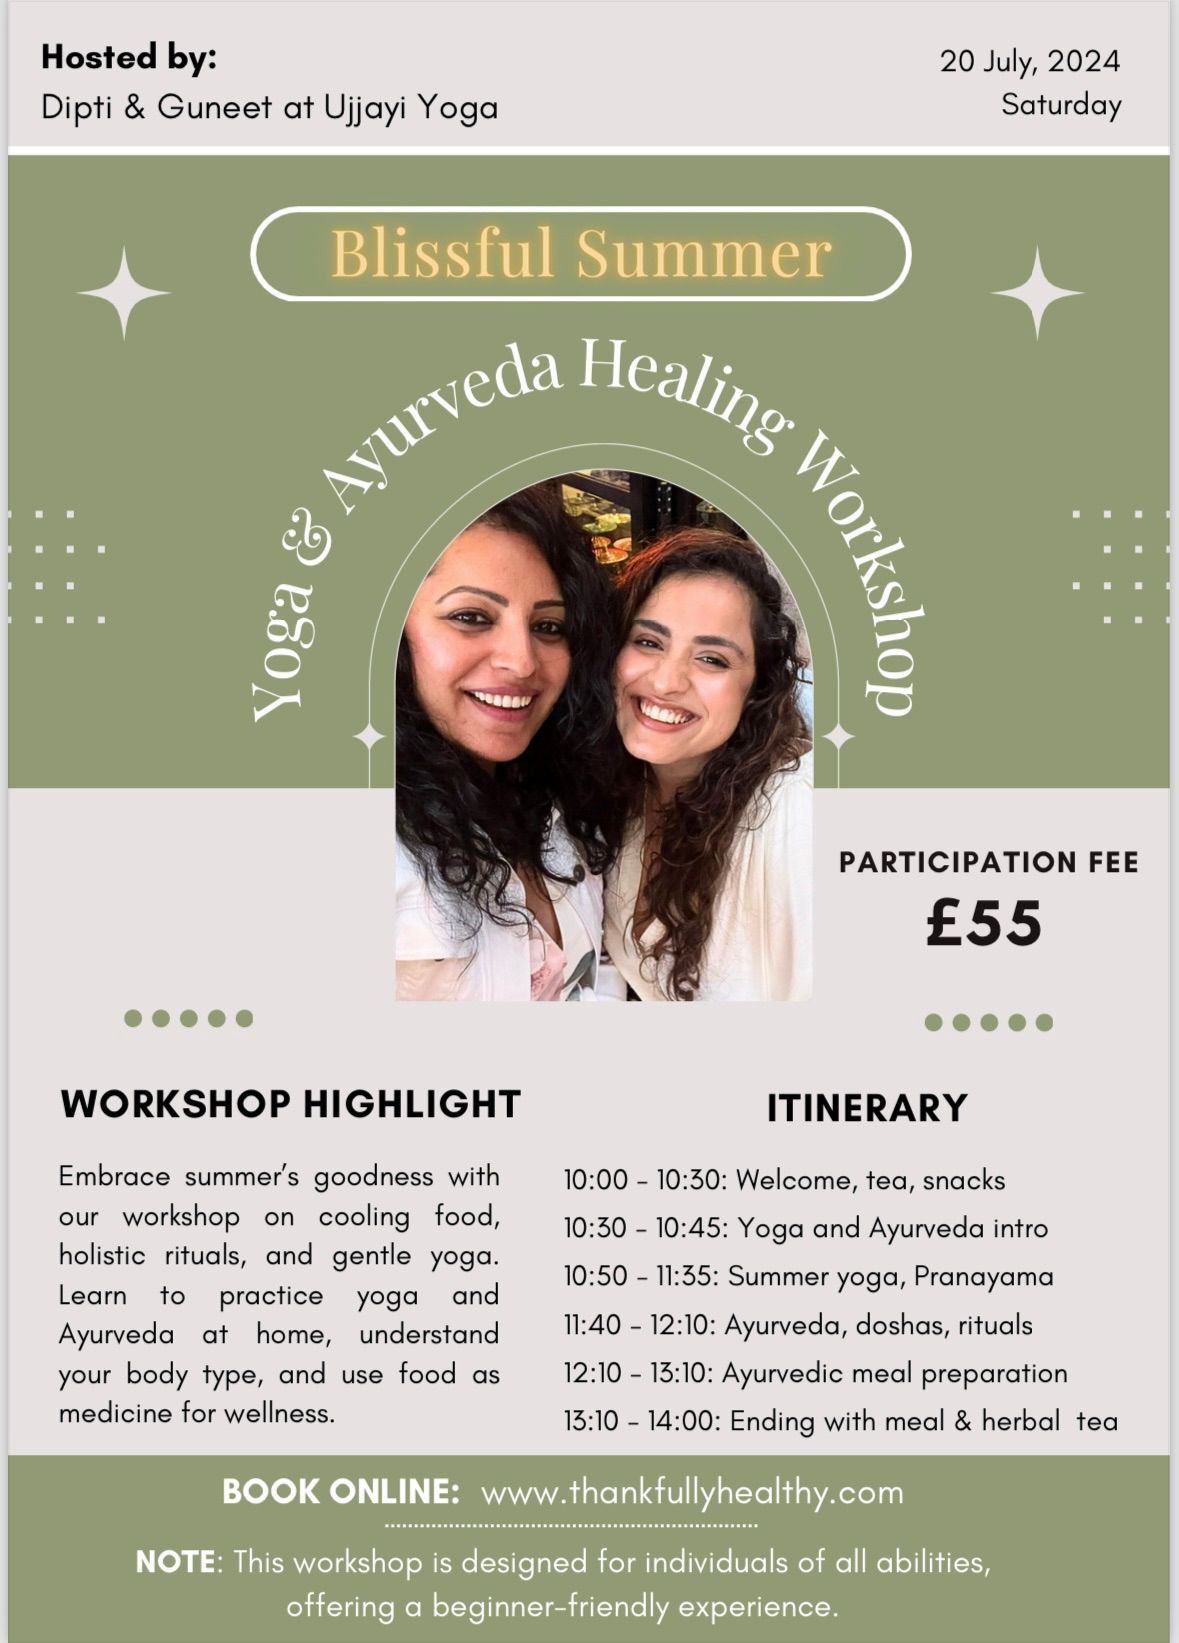 Blissful Summer: Yoga & Ayurveda Healing Workshop